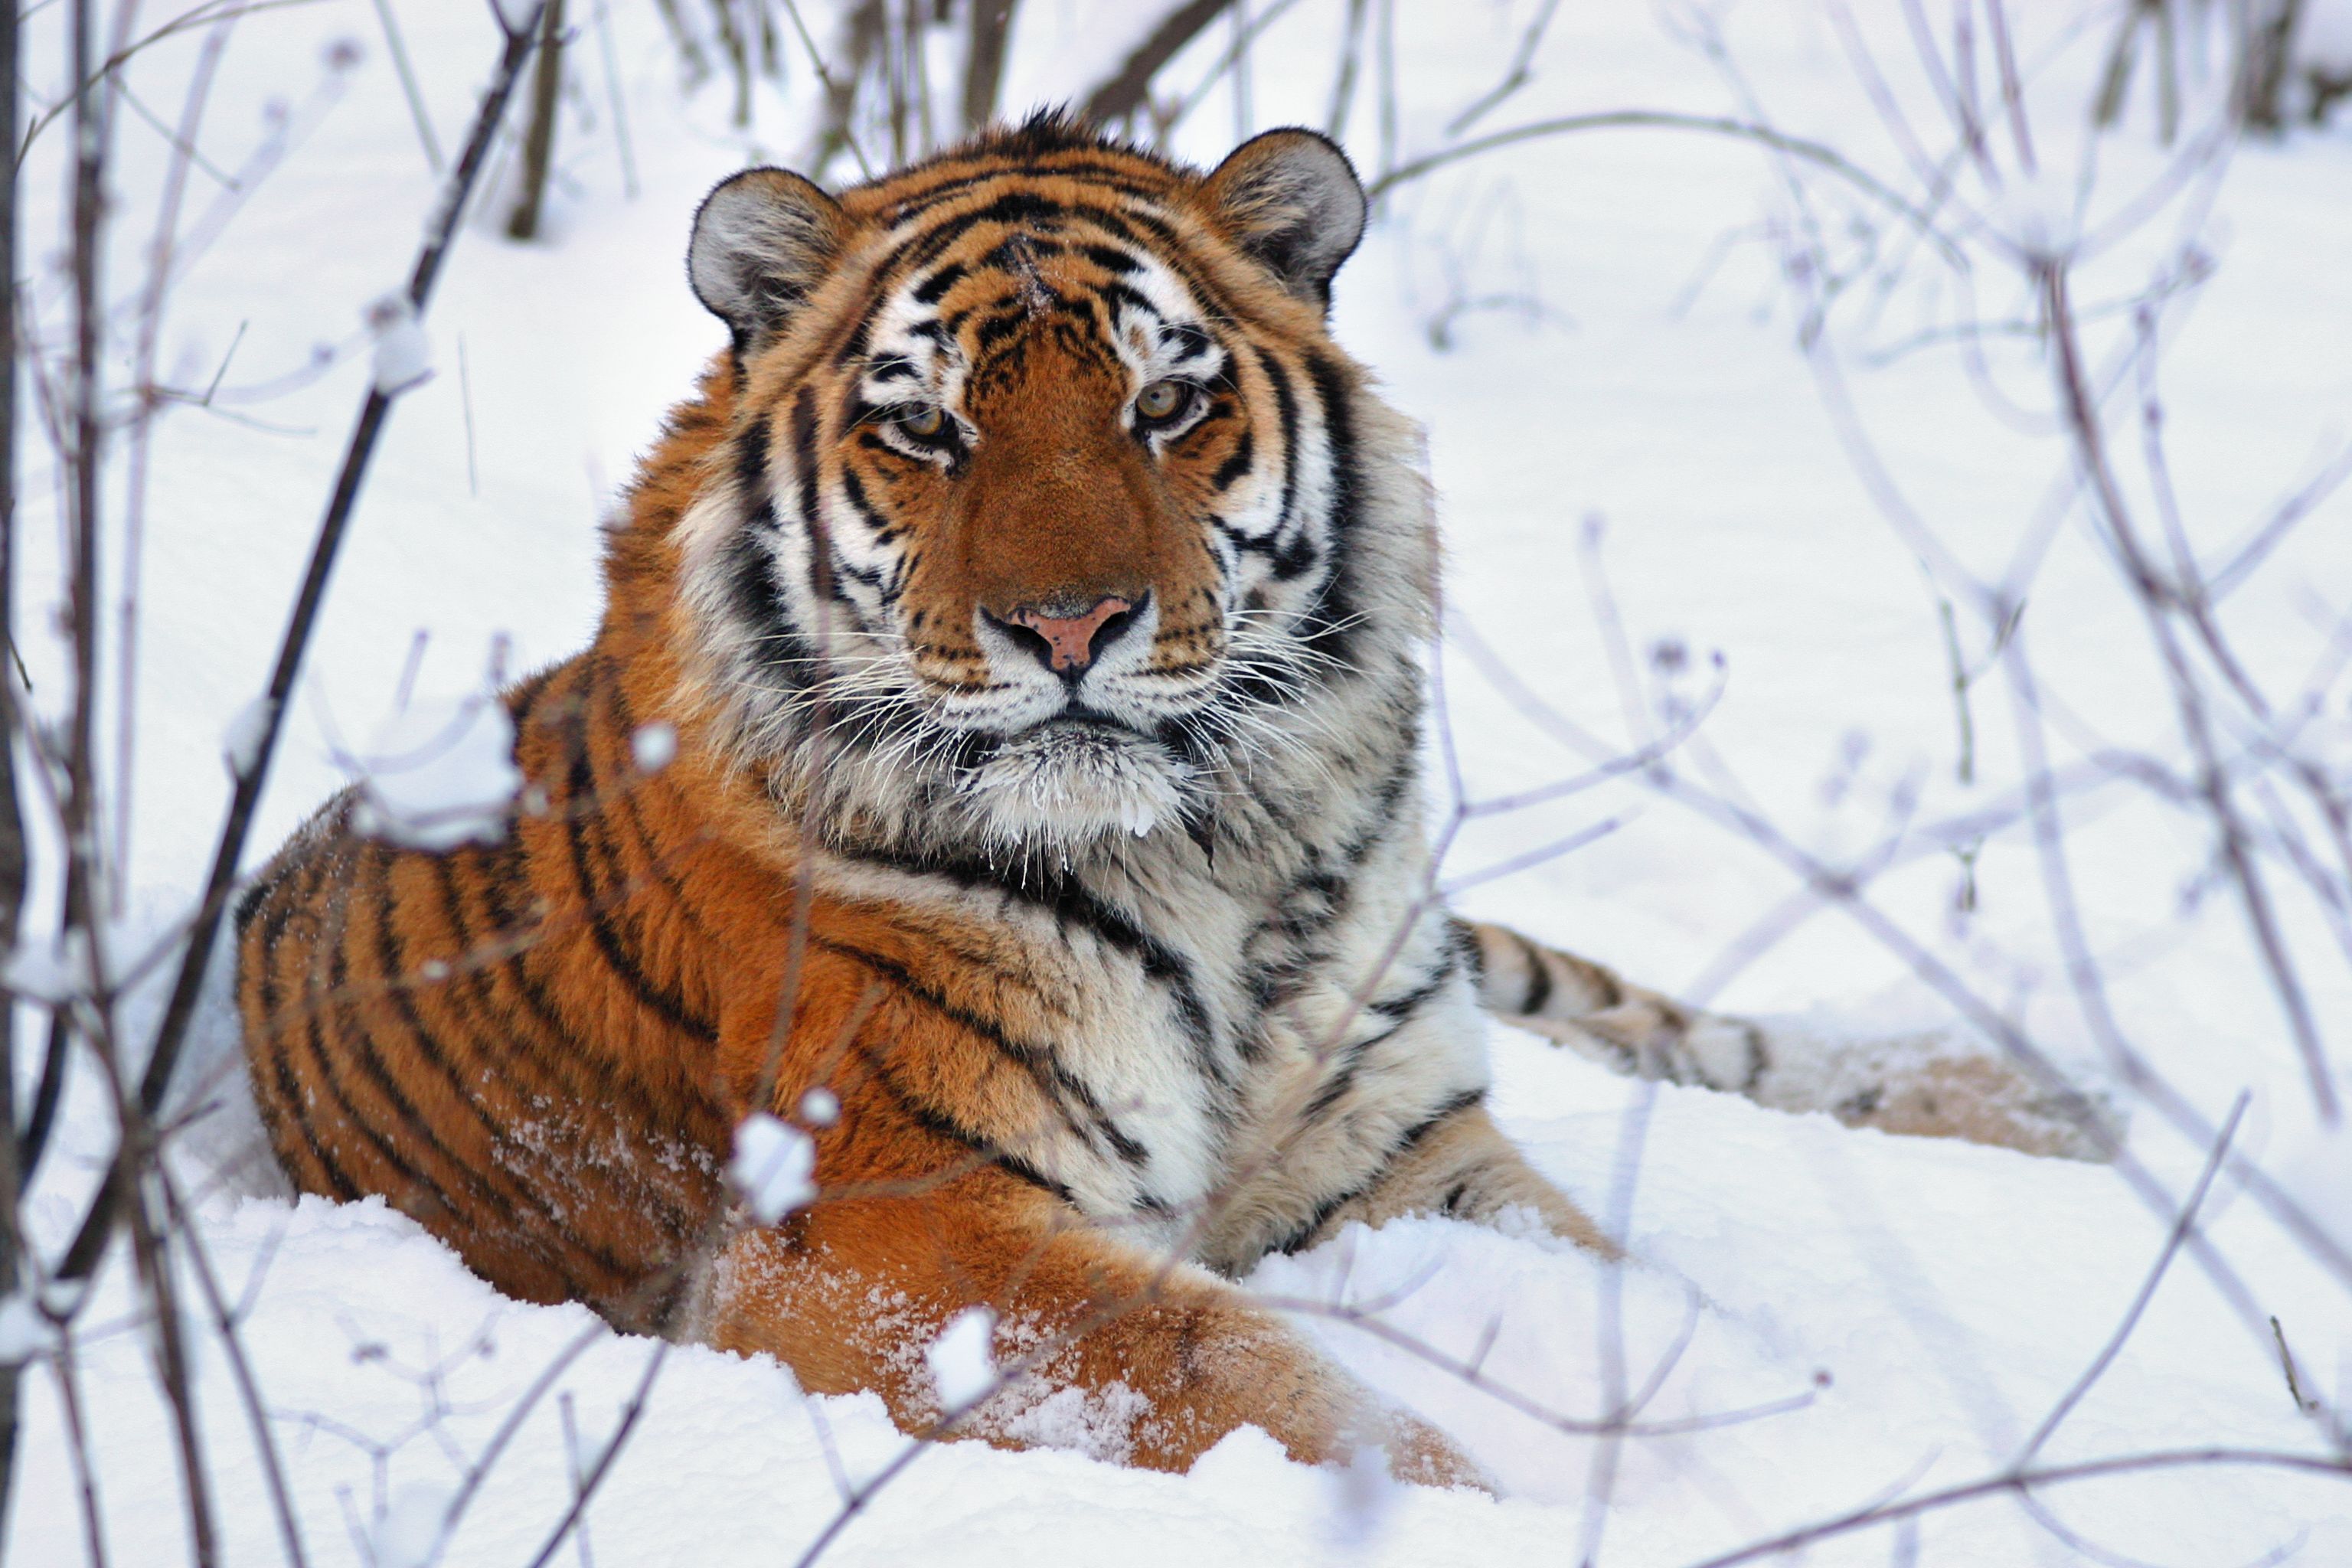 siberian tiger size comparison to human